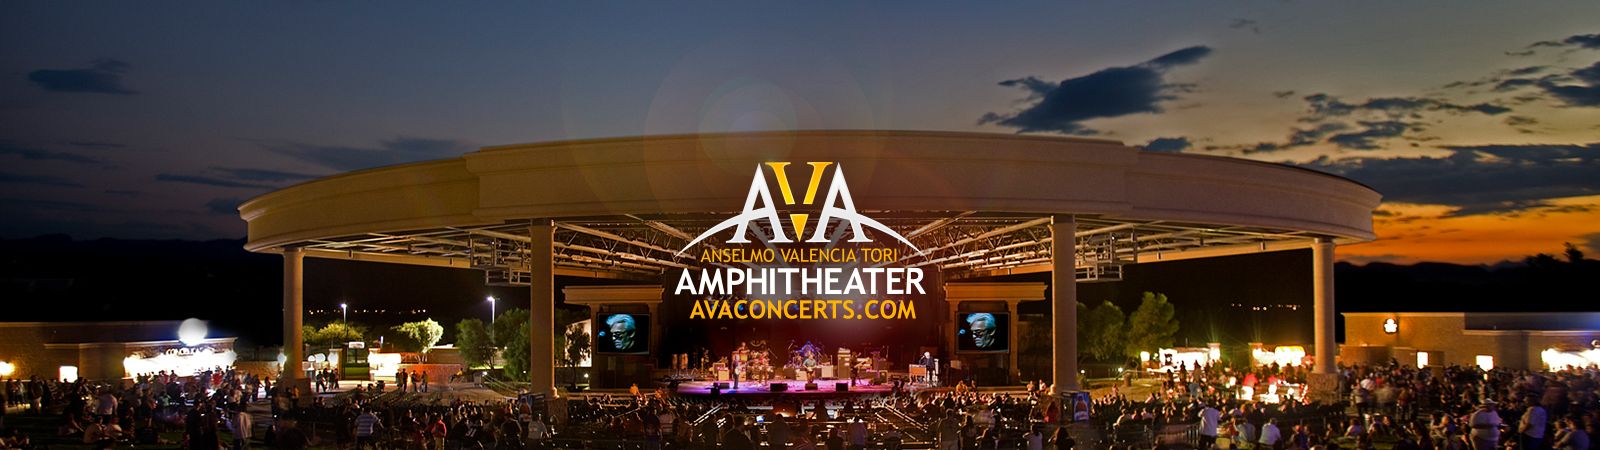 Tampa Amphitheater Vip Seating Chart